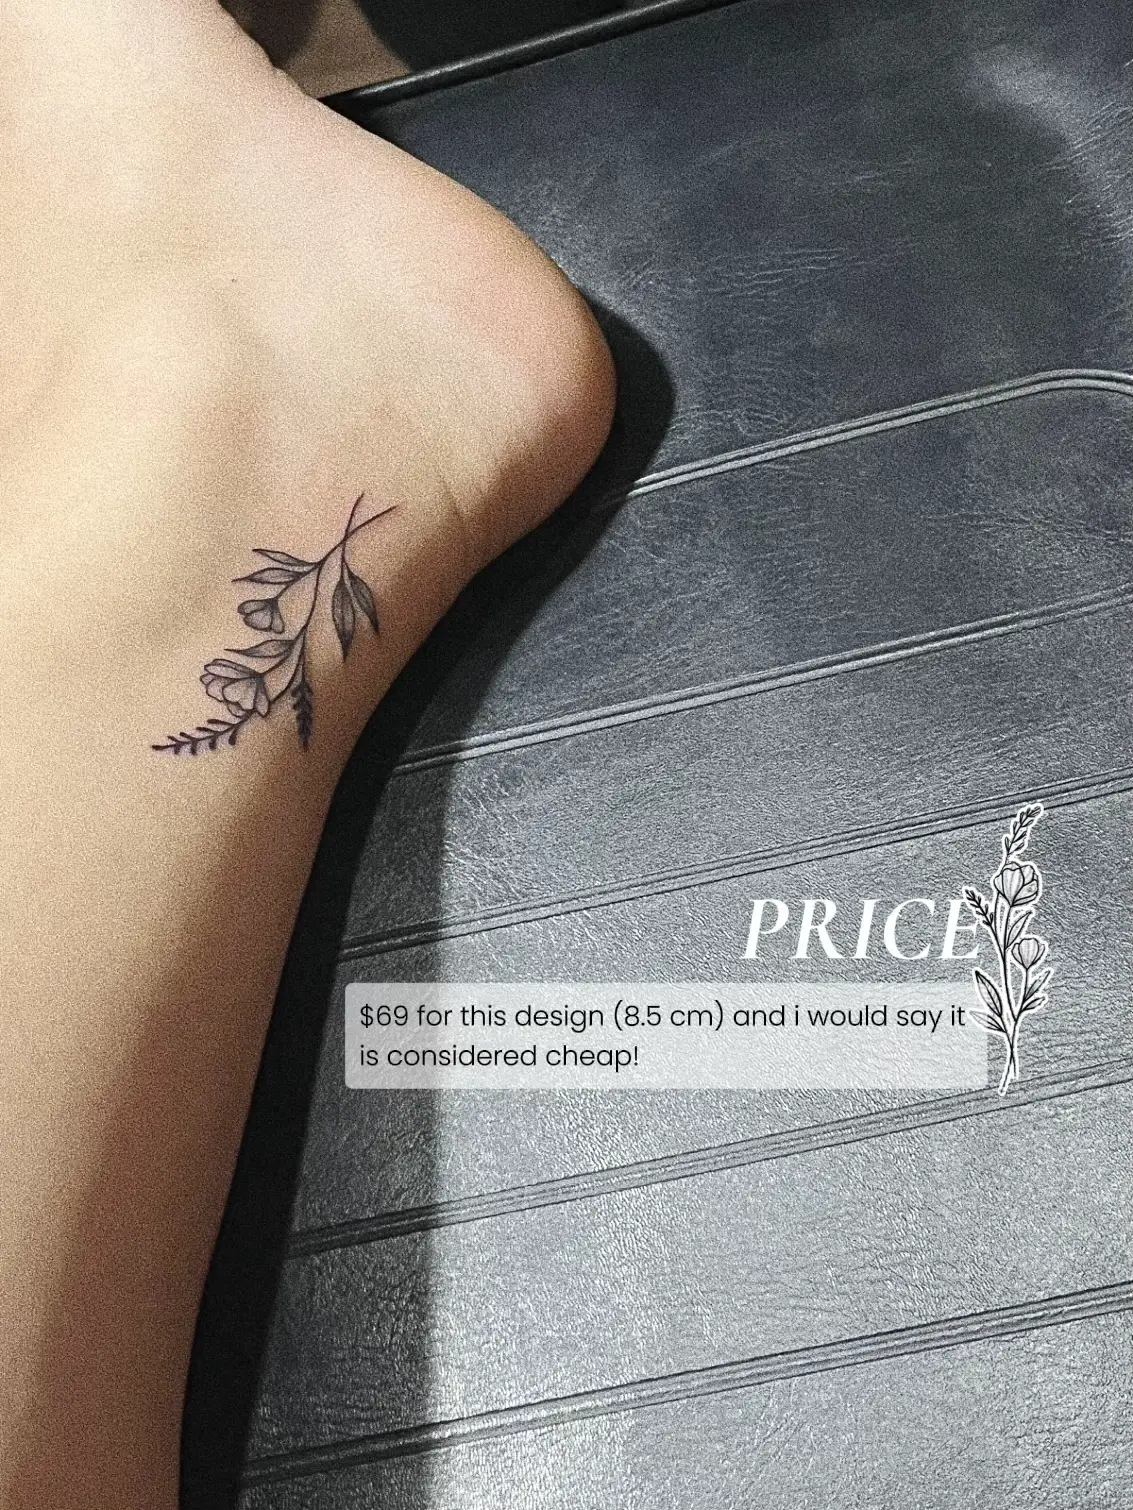 First ever tattoo is a full leg sleeve in Bali, Bali, I decided to go  for a full leg sleeve for my first tattoo 😁🇮🇩